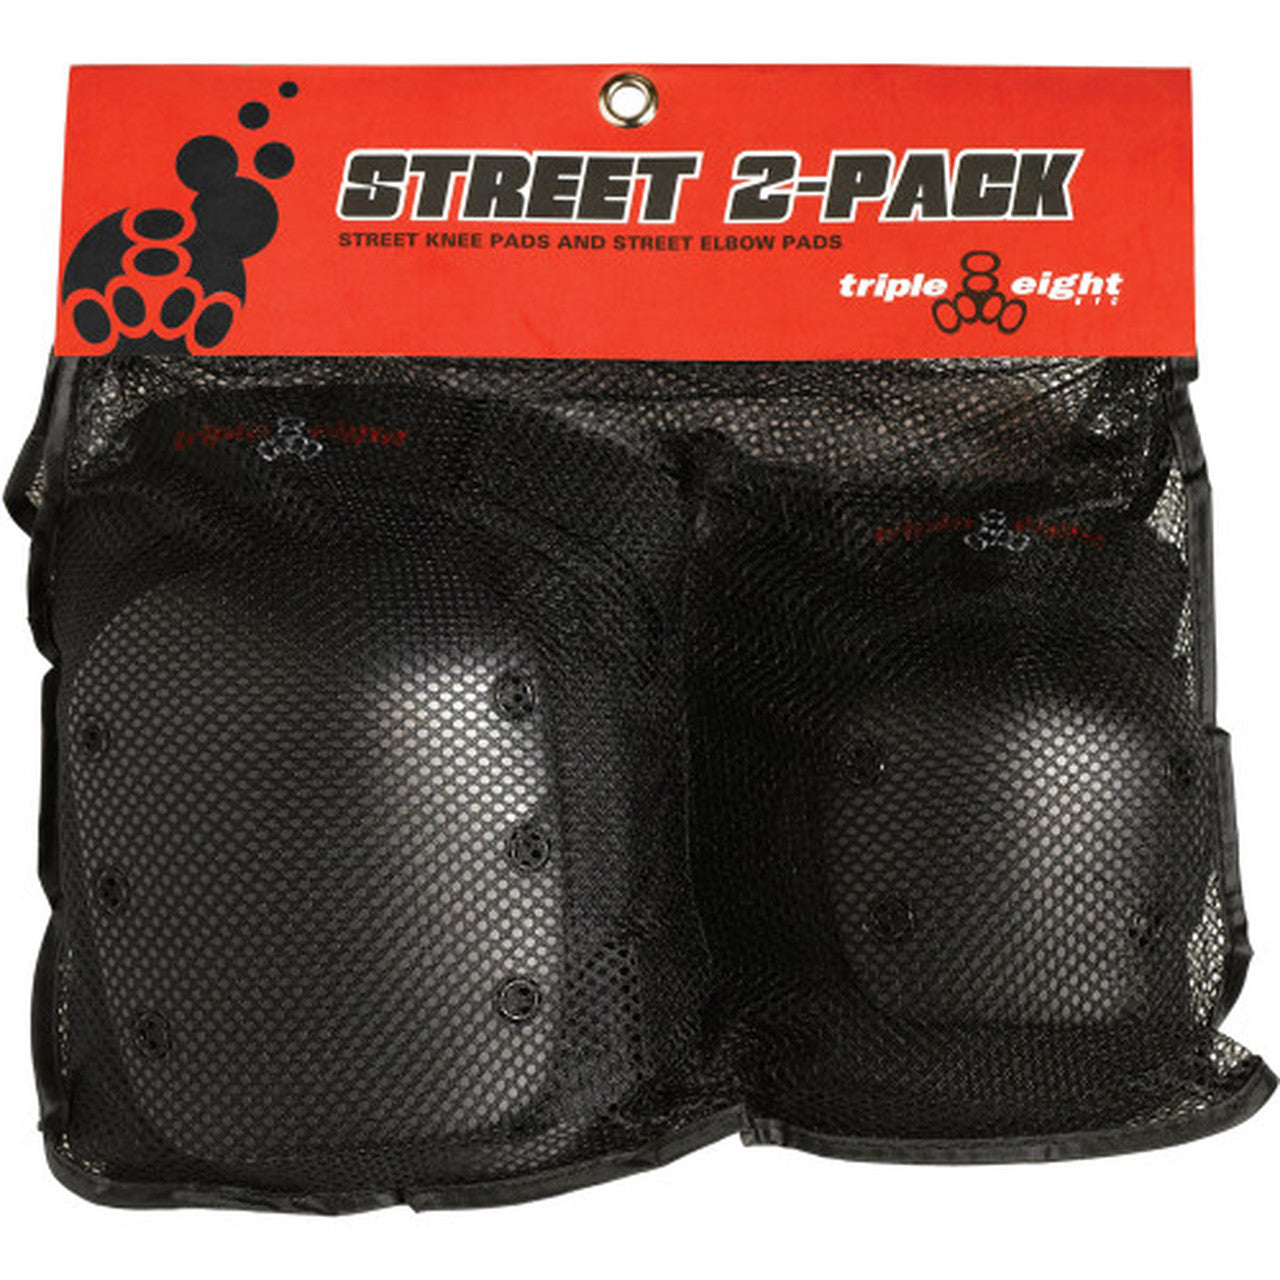 Proteccion Street 2 Pack set